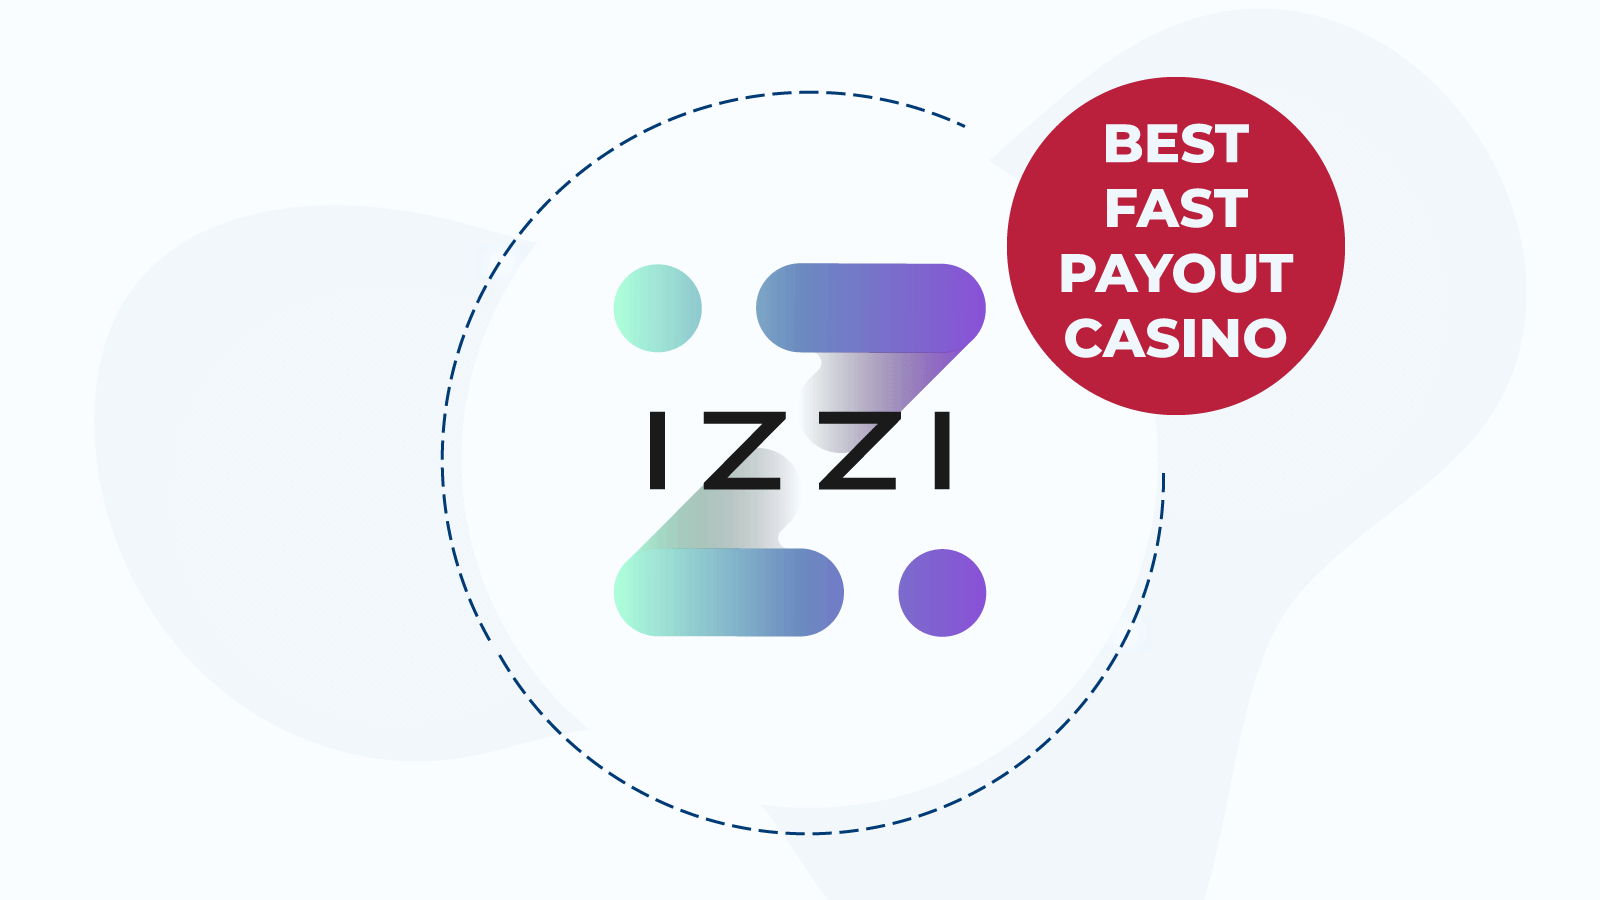 Izzi Casino – The best fast payout casino